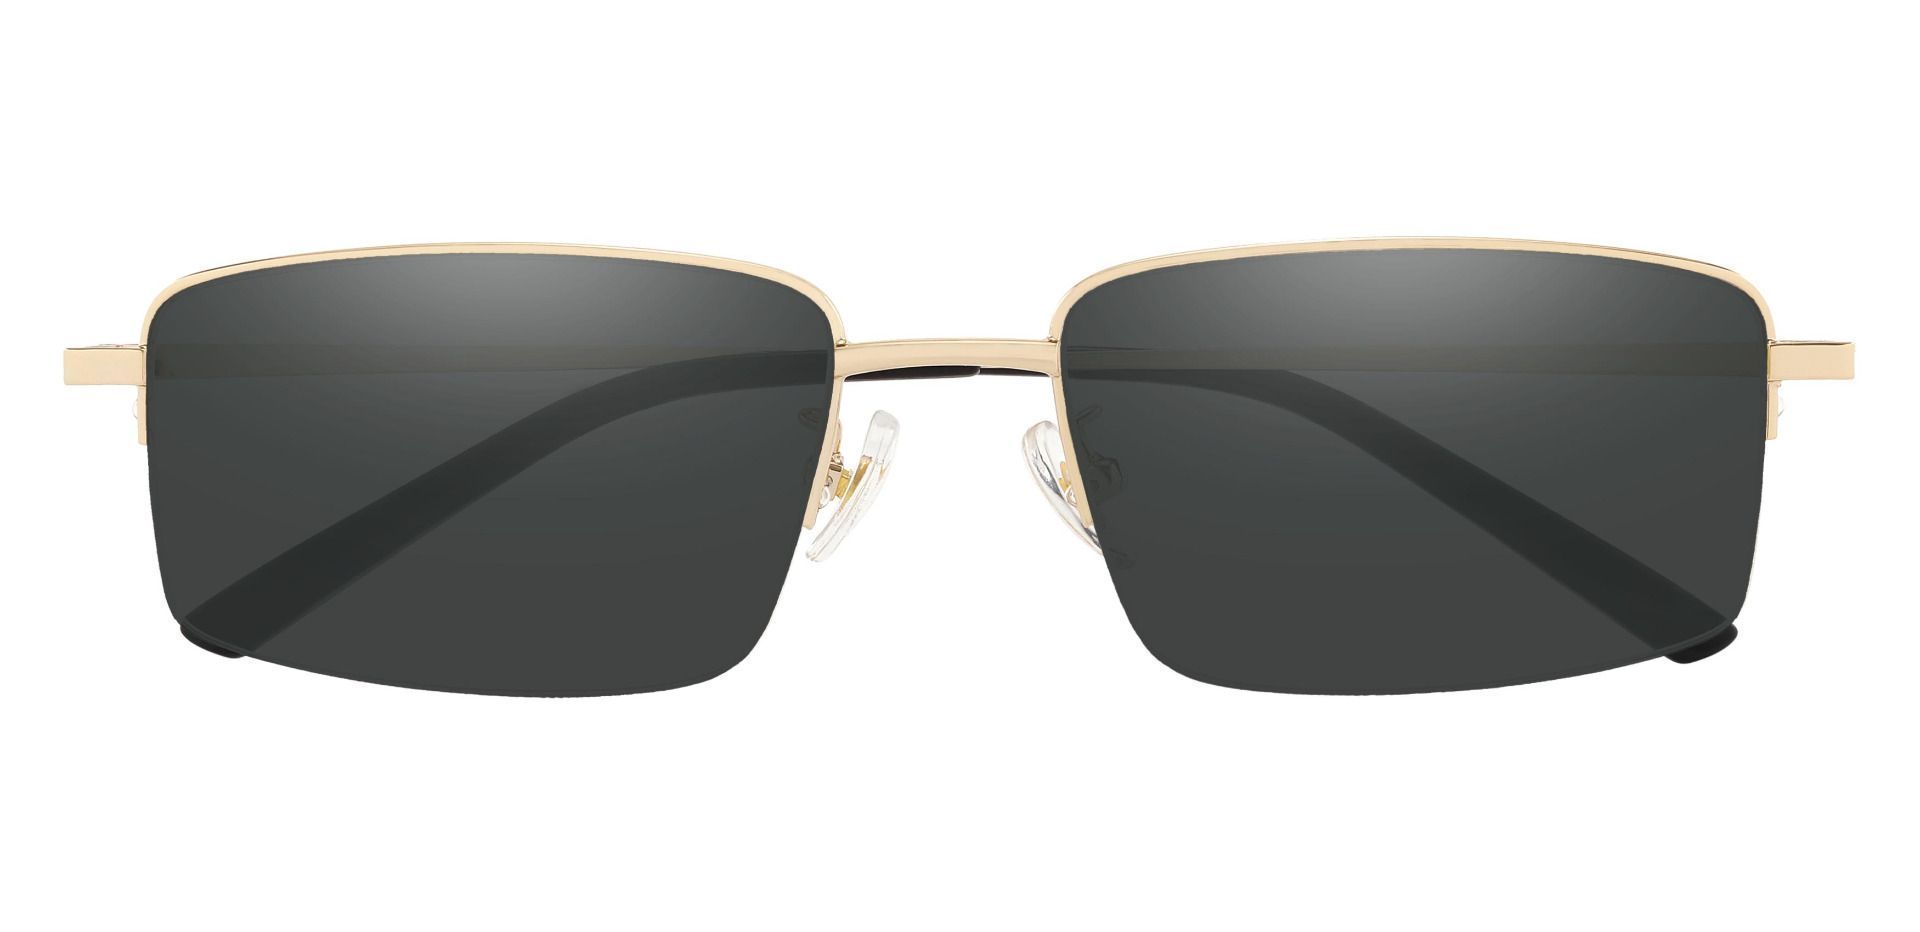 Wayne Rectangle Reading Sunglasses - Gold Frame With Gray Lenses